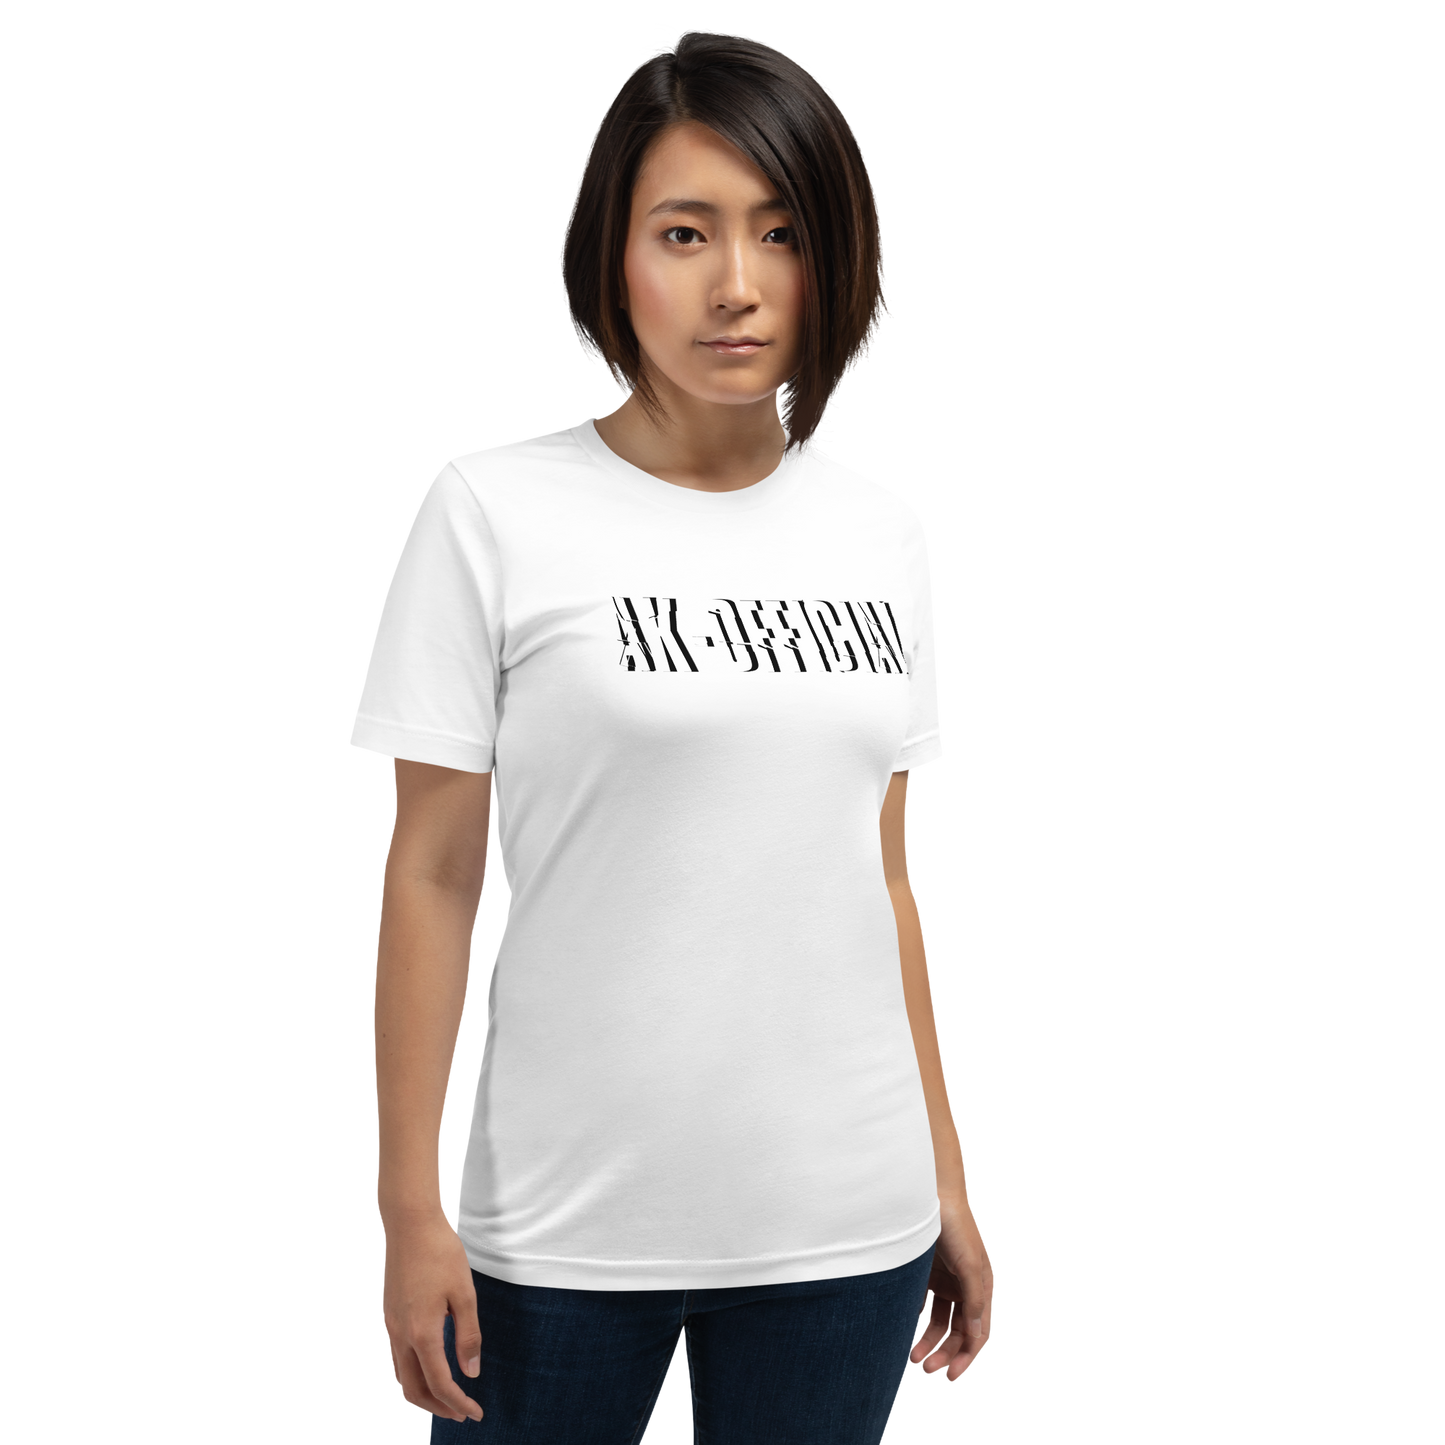 AK-Xplosion Shadow - Unisex T-Shirt, white